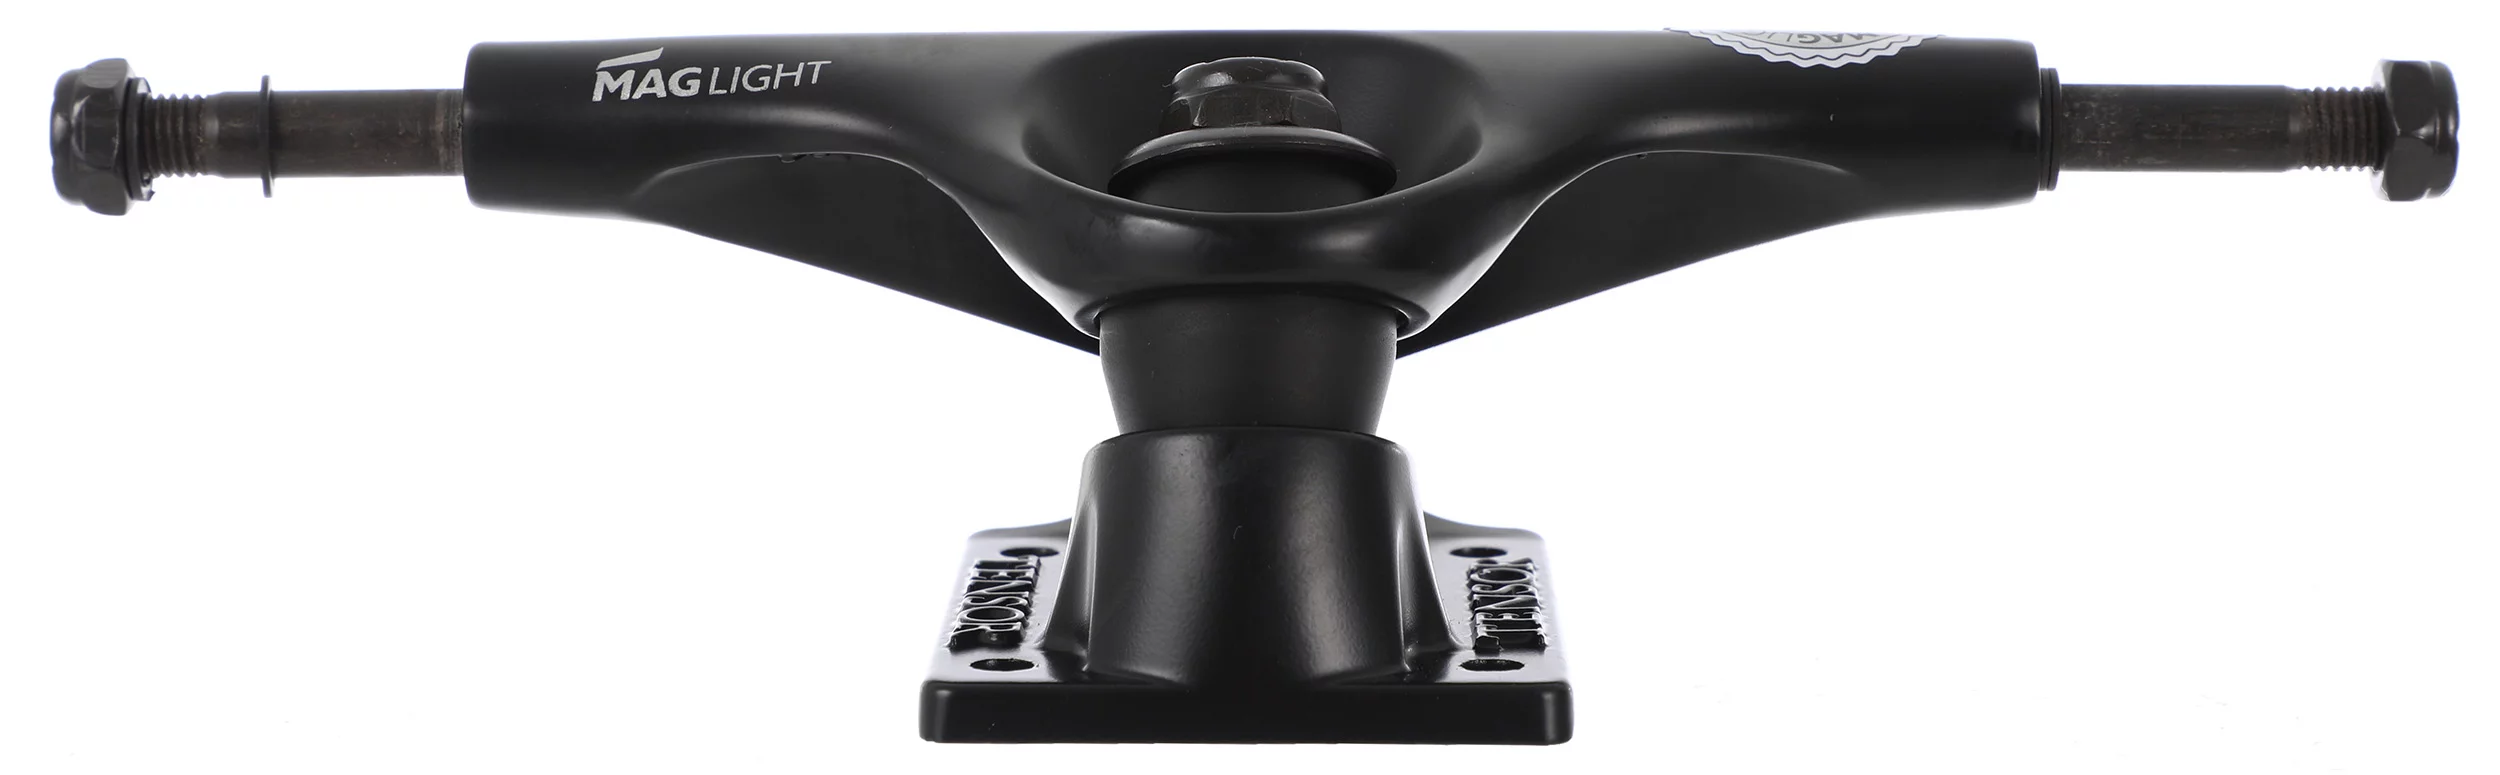 Tensor Mag Light Skateboard Trucks - black (5.25 lo) - Free 